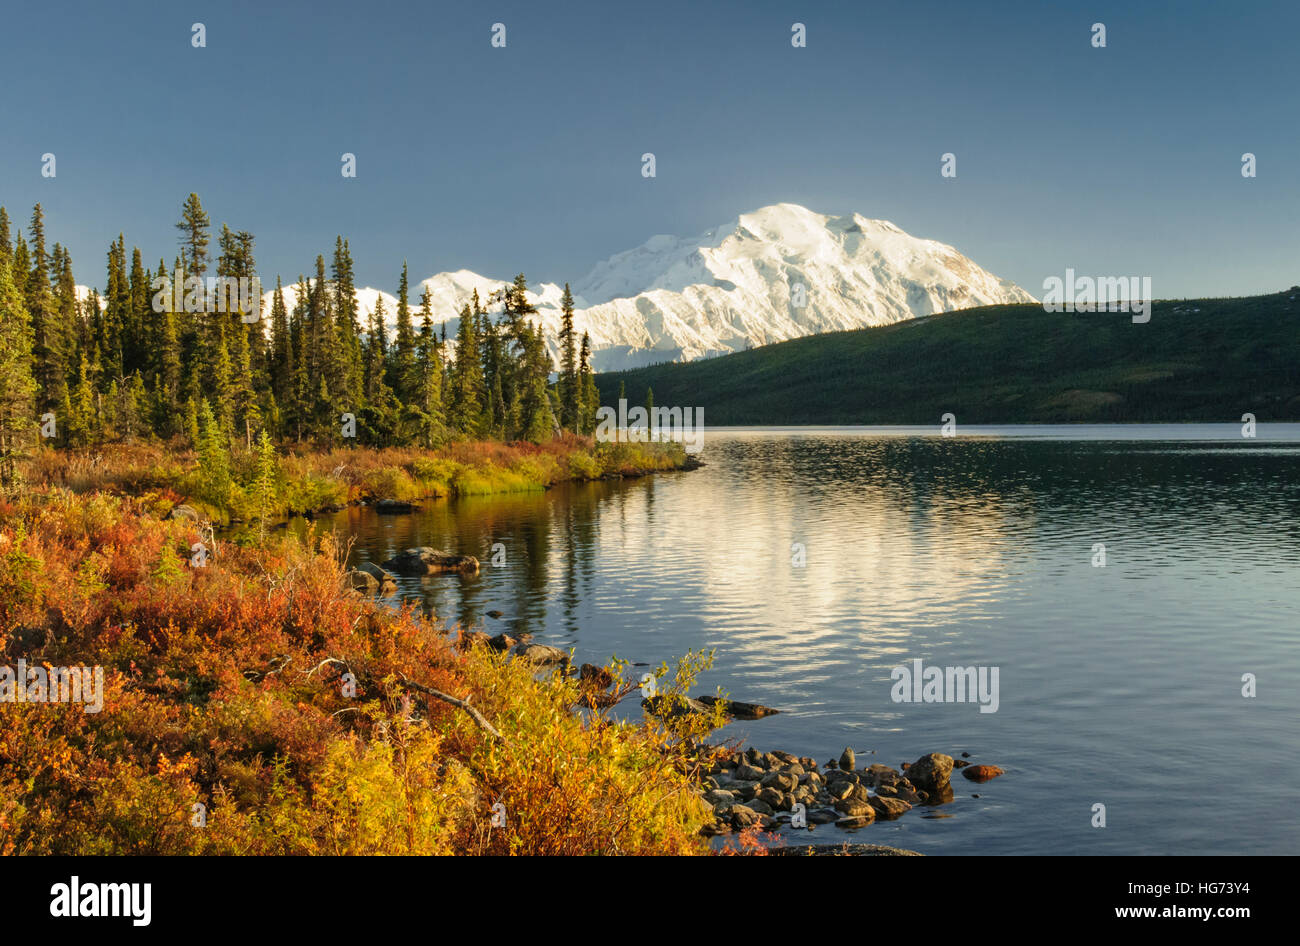 Mount Denali from Wonder Lake in Autumn colors, Alaska. Stock Photo